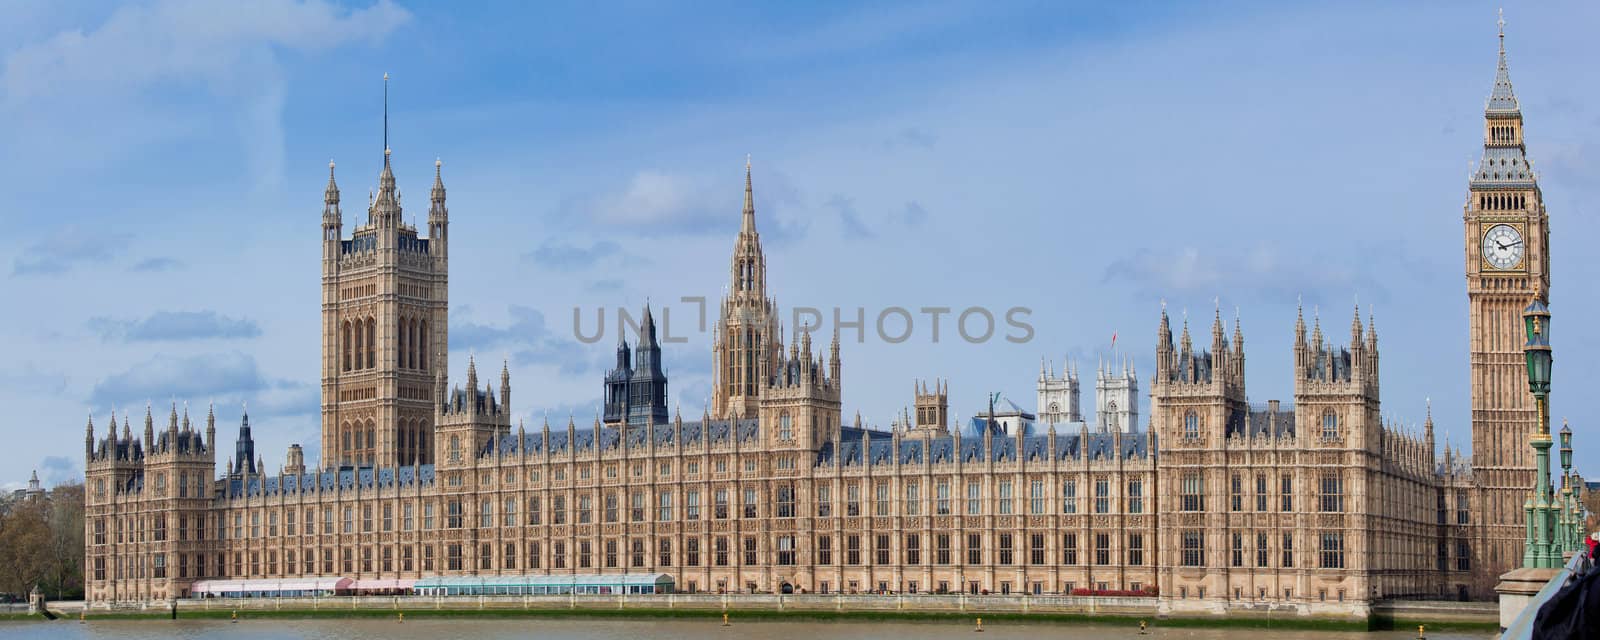 Panorama of Big Ben London by vichie81